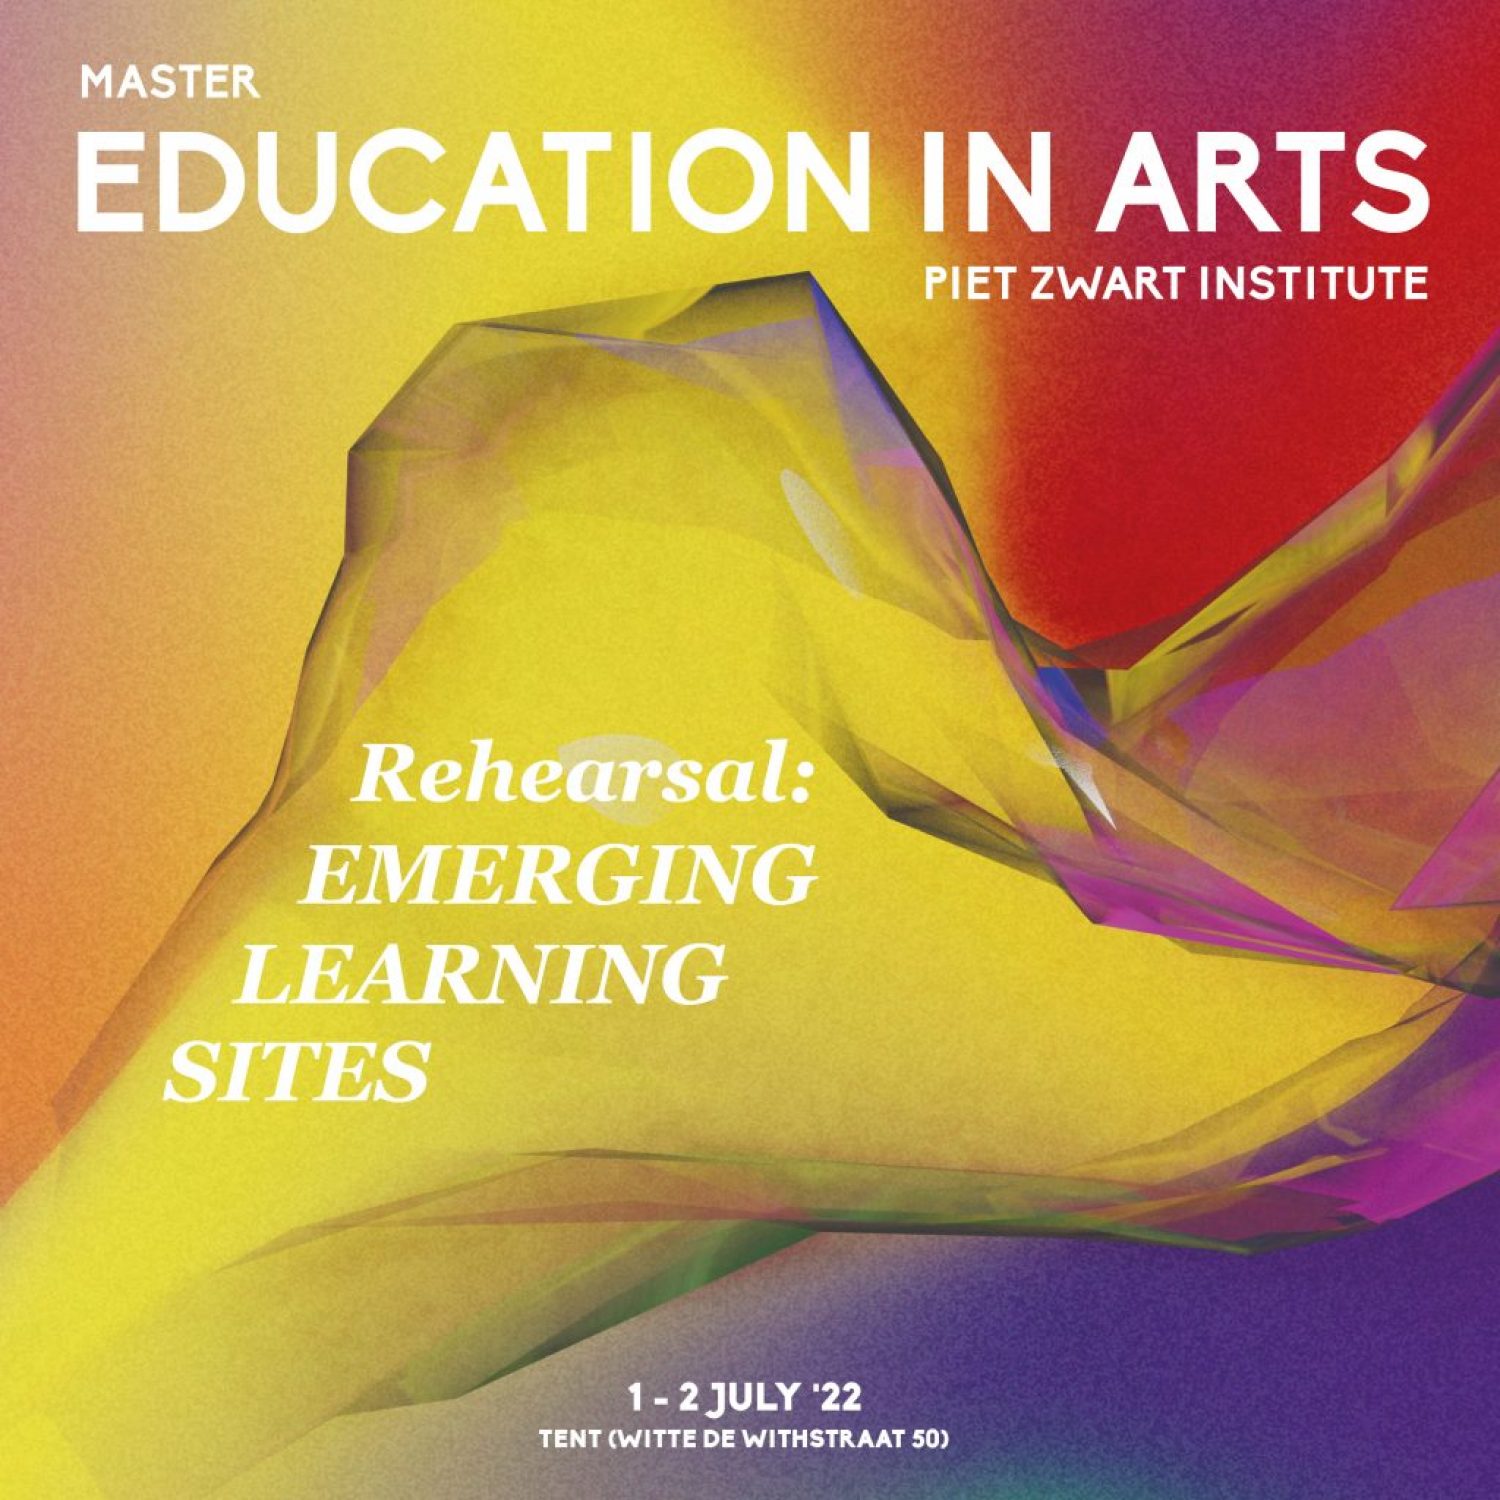 Symposium, Rehearsal: Emerging Learning Sites